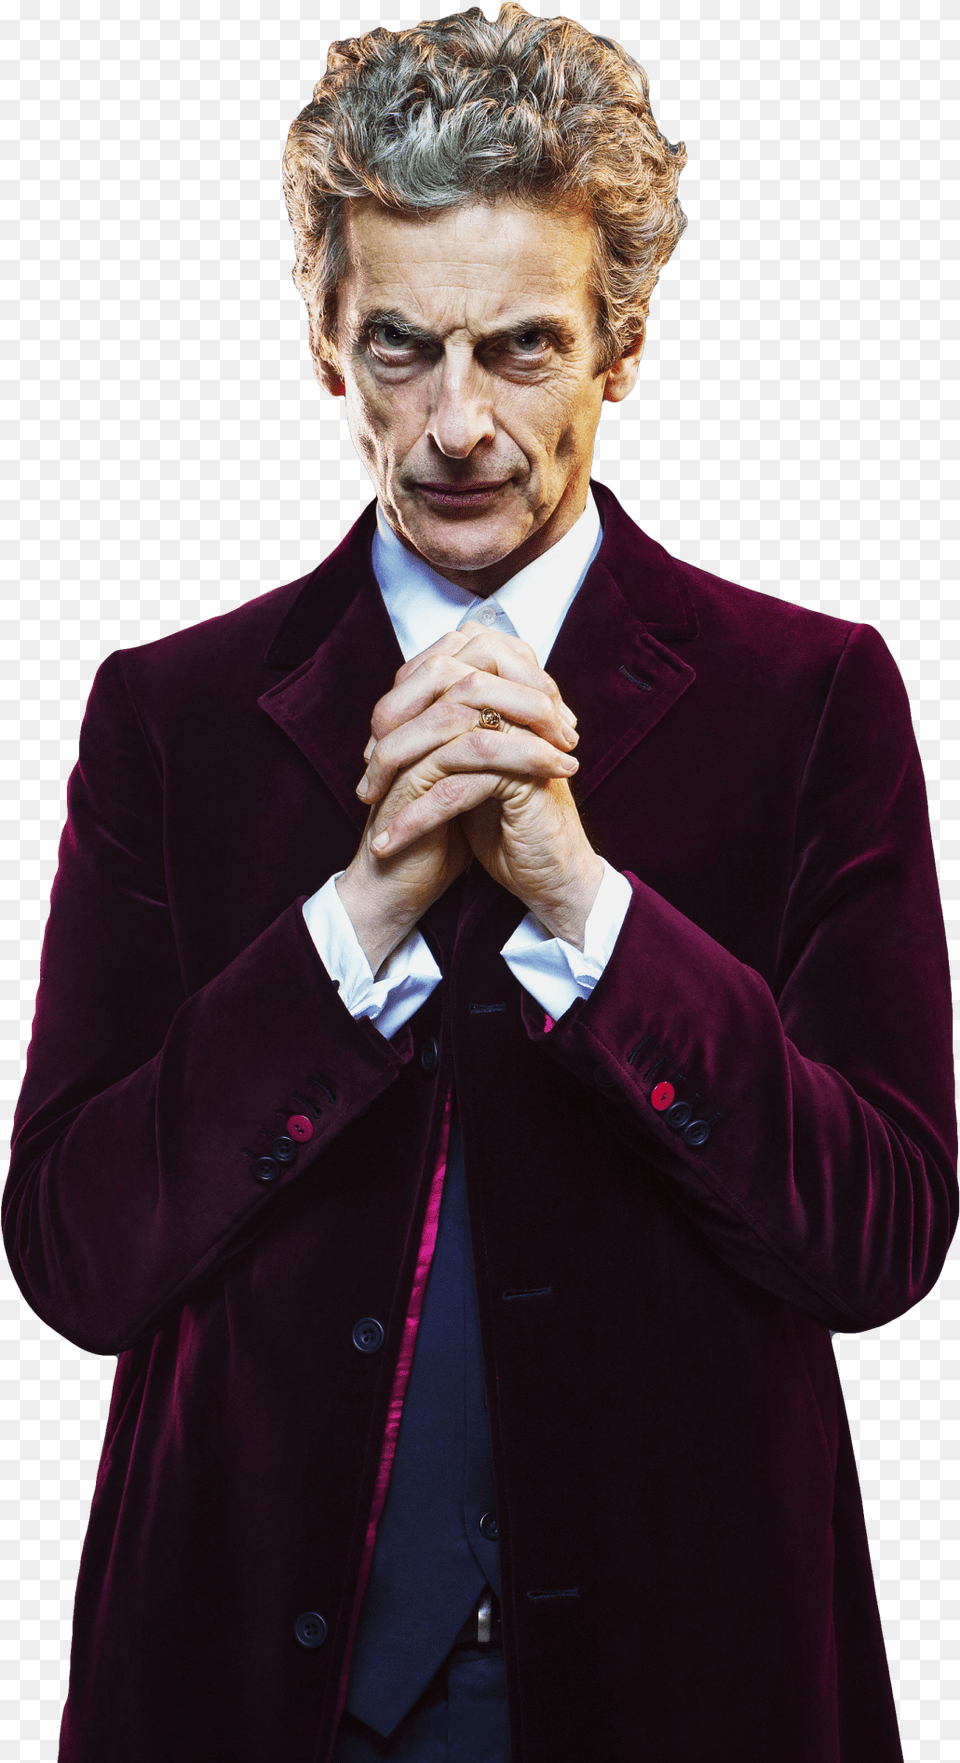 Fandom Transparents U2014 Transparent 12th Doctor Doctor Who The New Series, Jacket, Person, Portrait, Suit Png